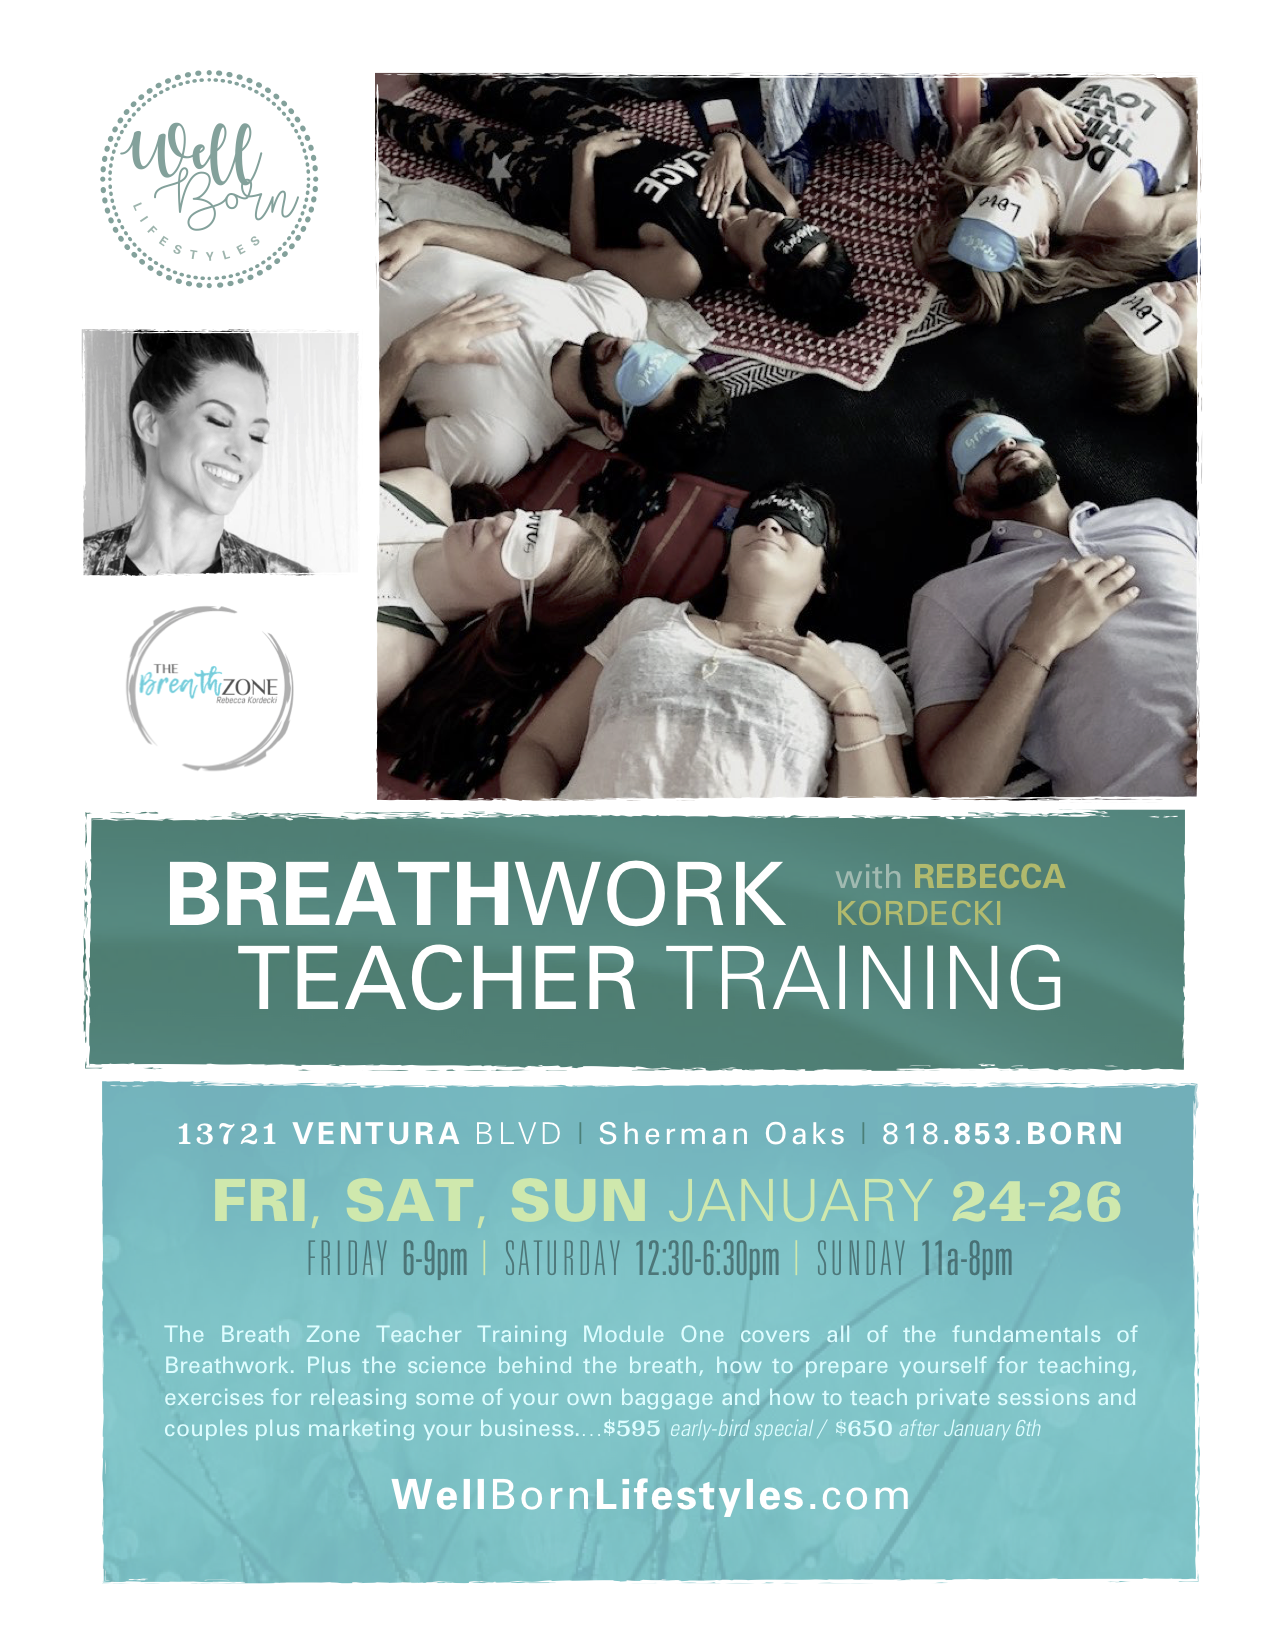 Breathwork Teacher Training with Rebecca Kordecki